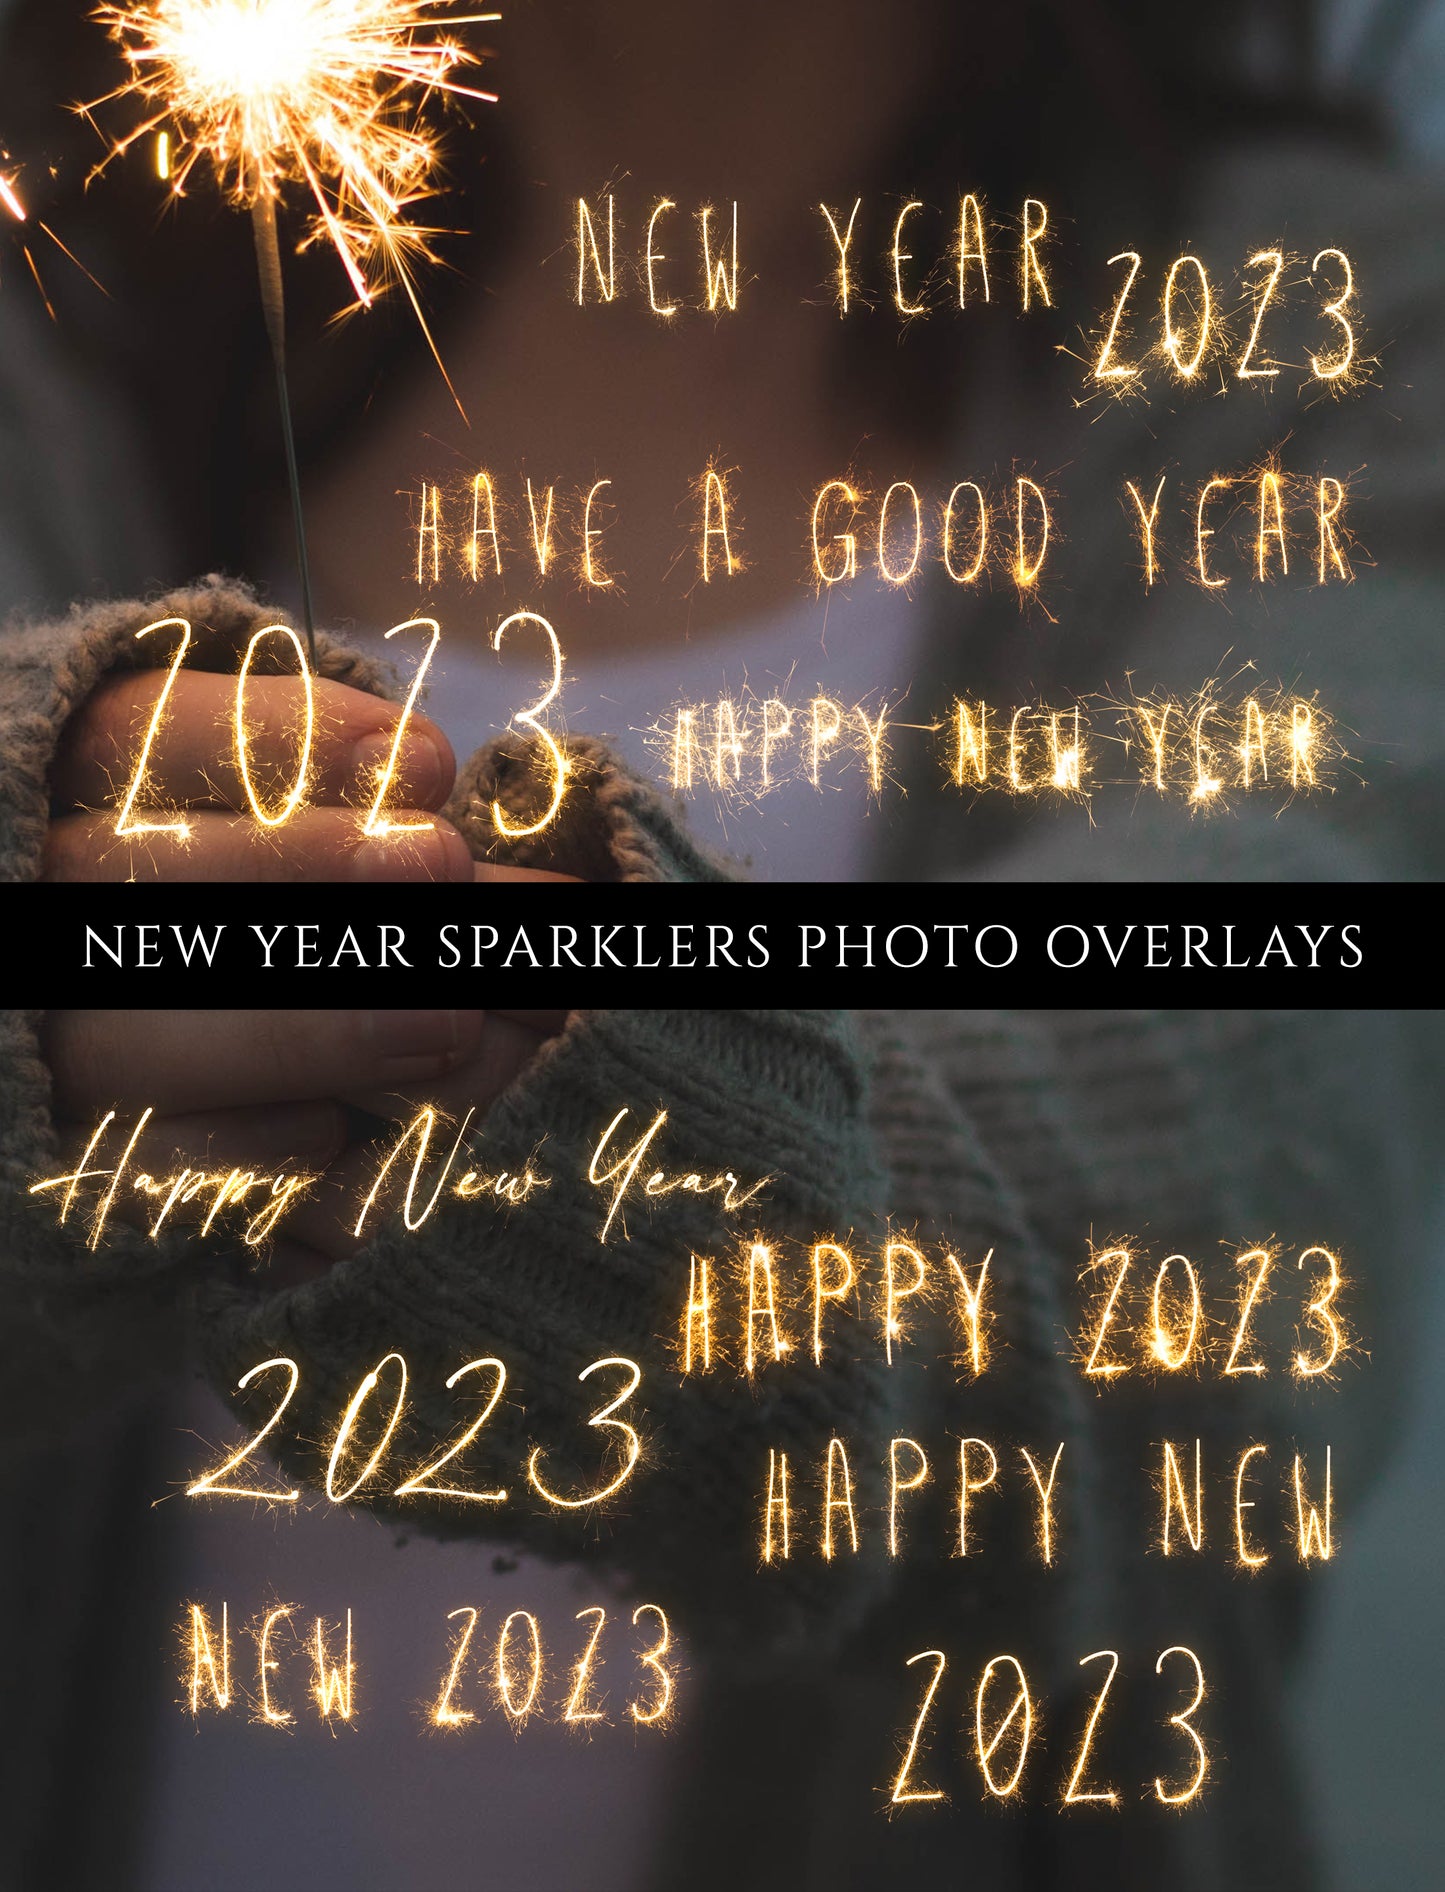 New Year Sparklers Photo Overlays